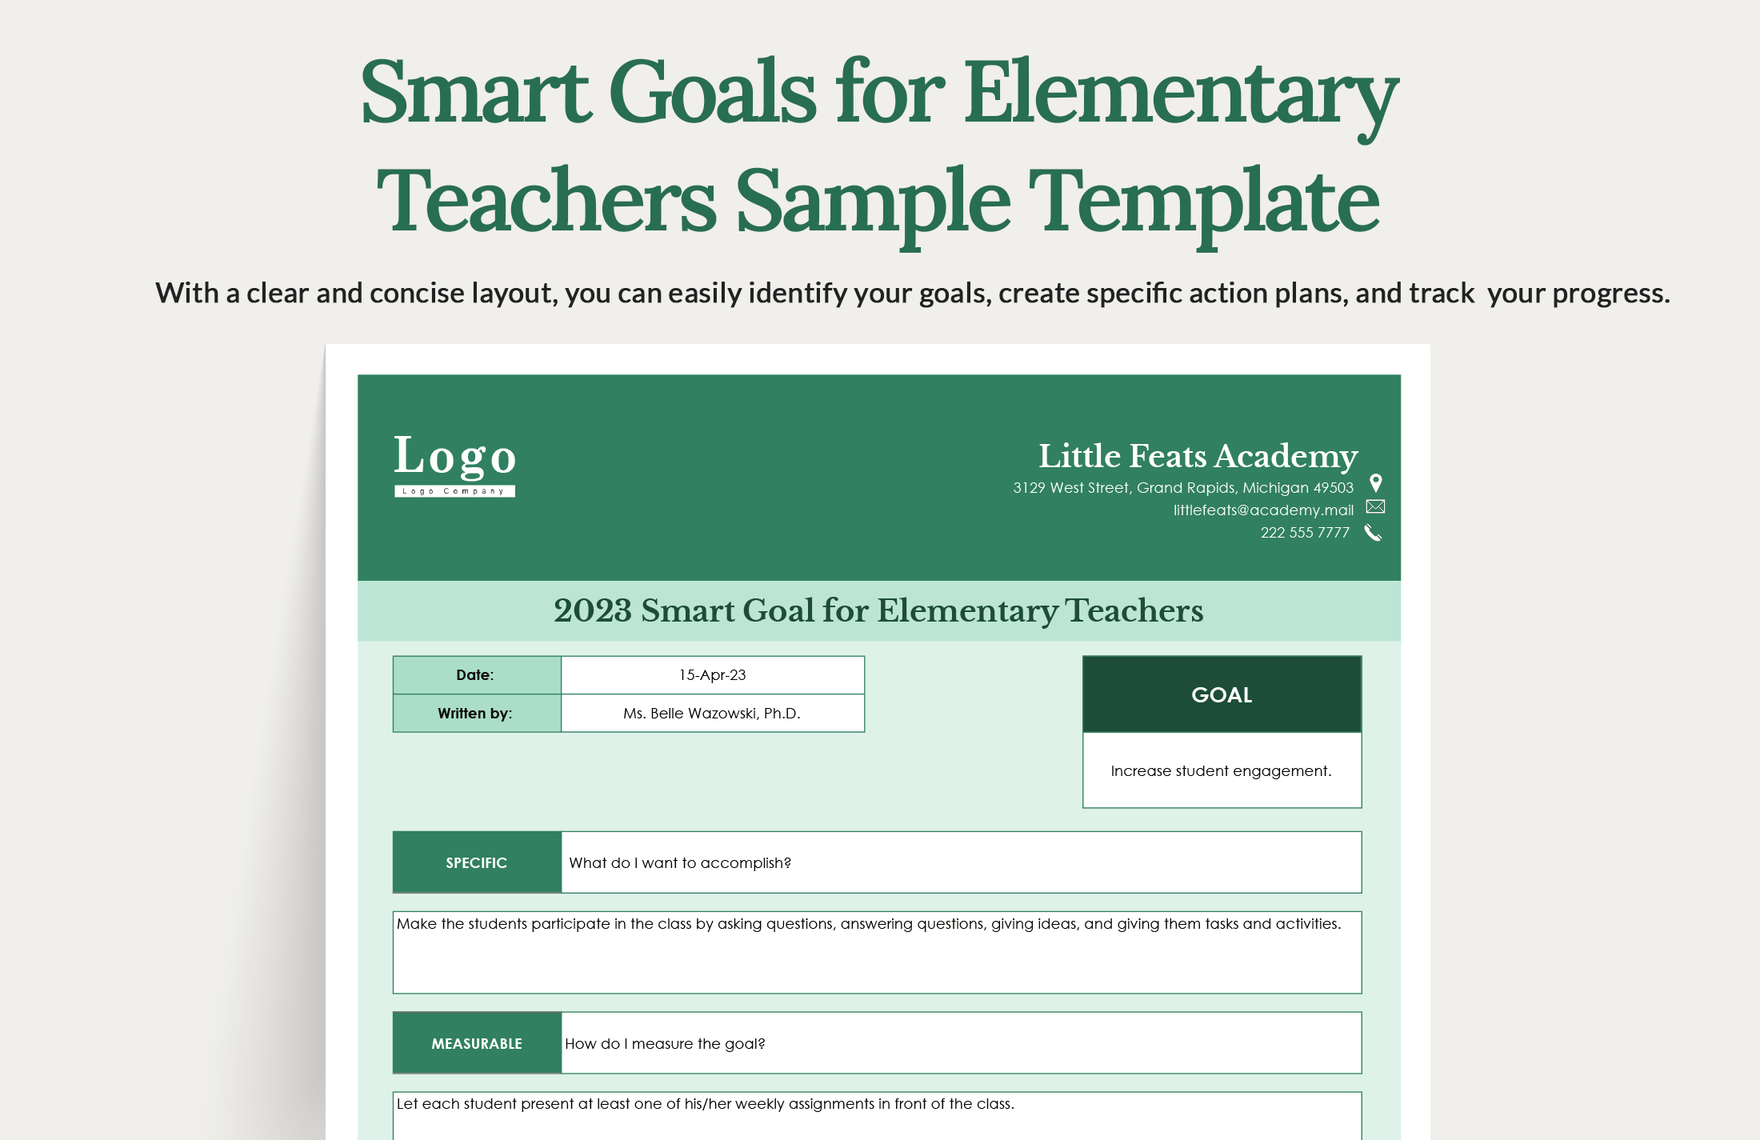 Smart Goals for Elementary Teachers Sample Template